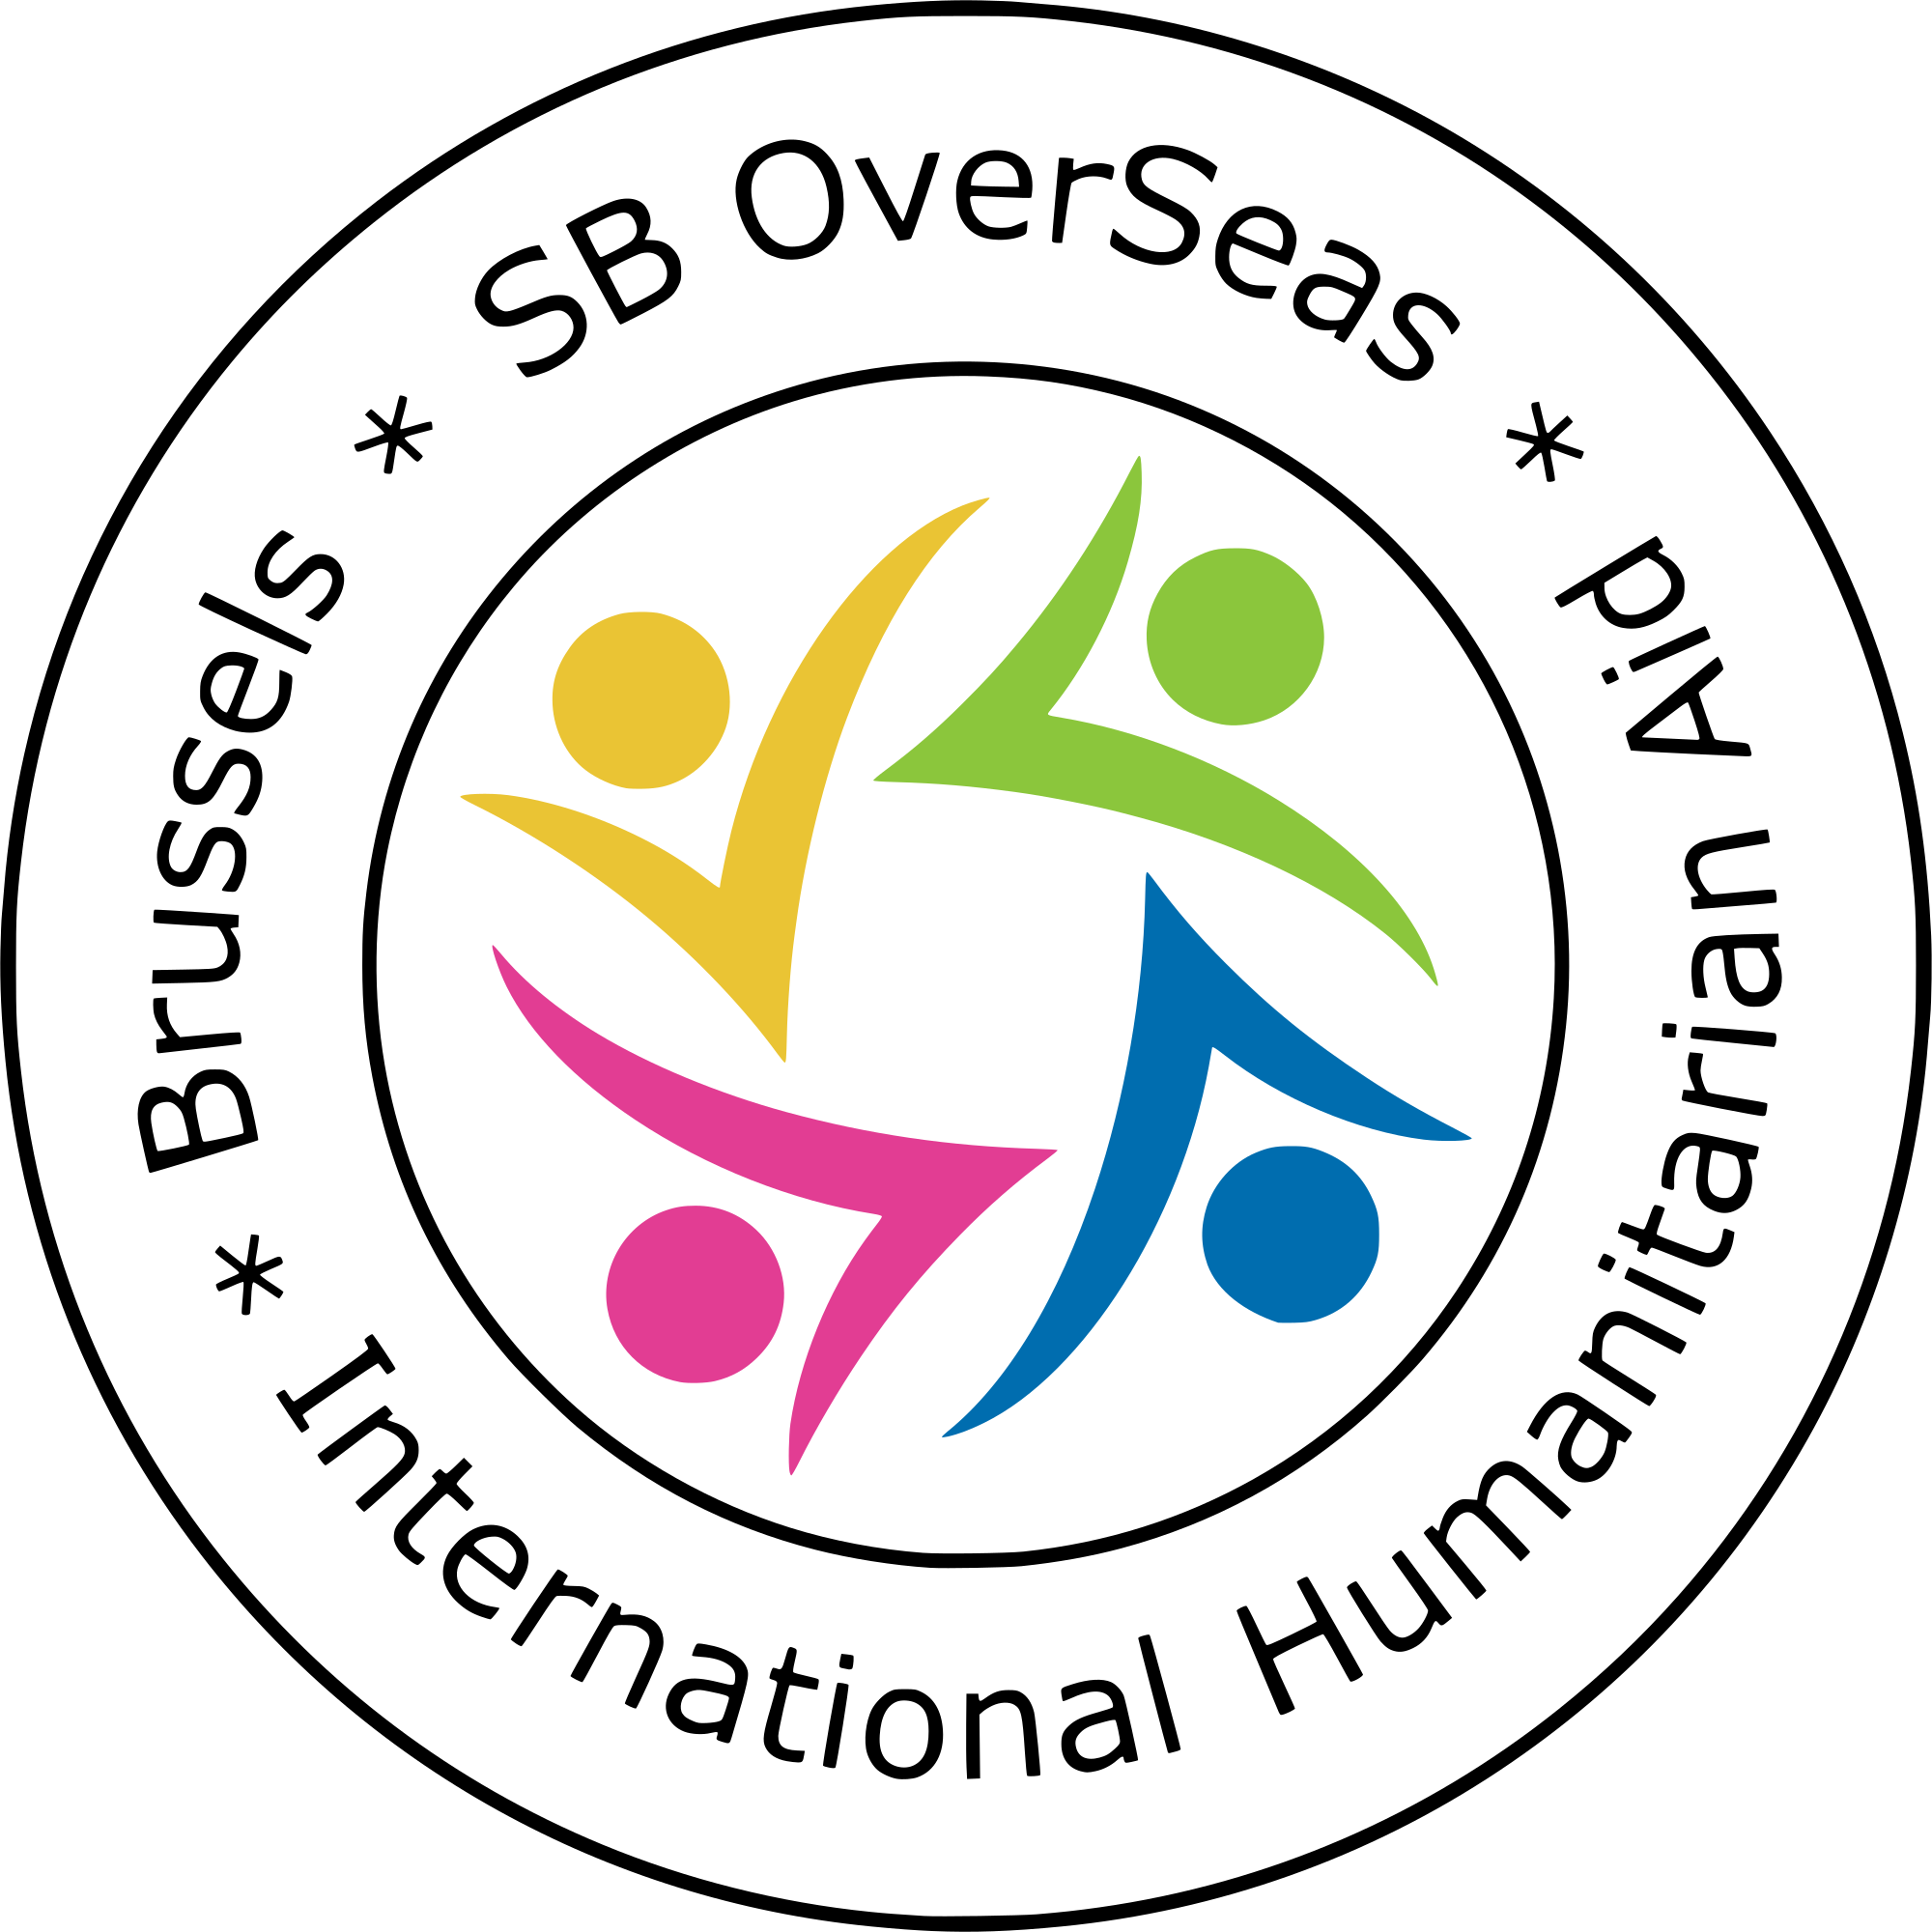 SBOverseas Logo